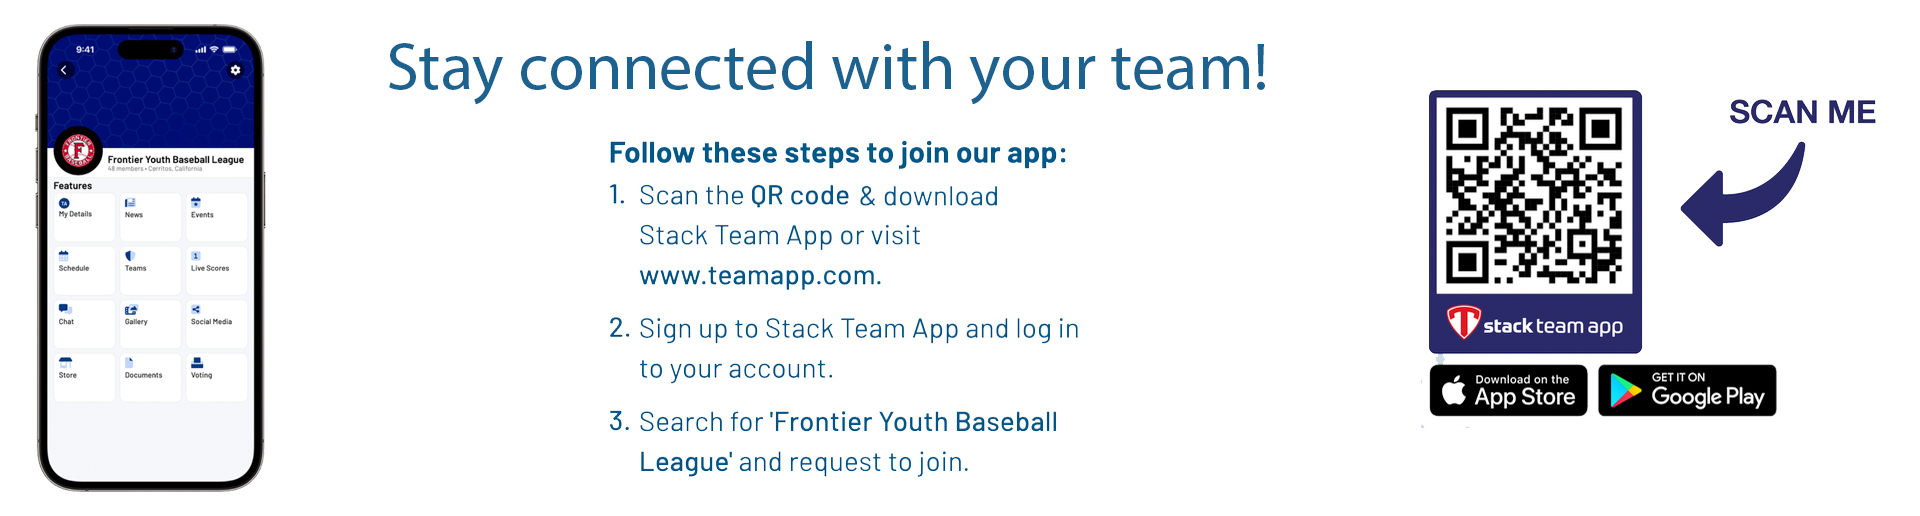 Stack Team App Instructions